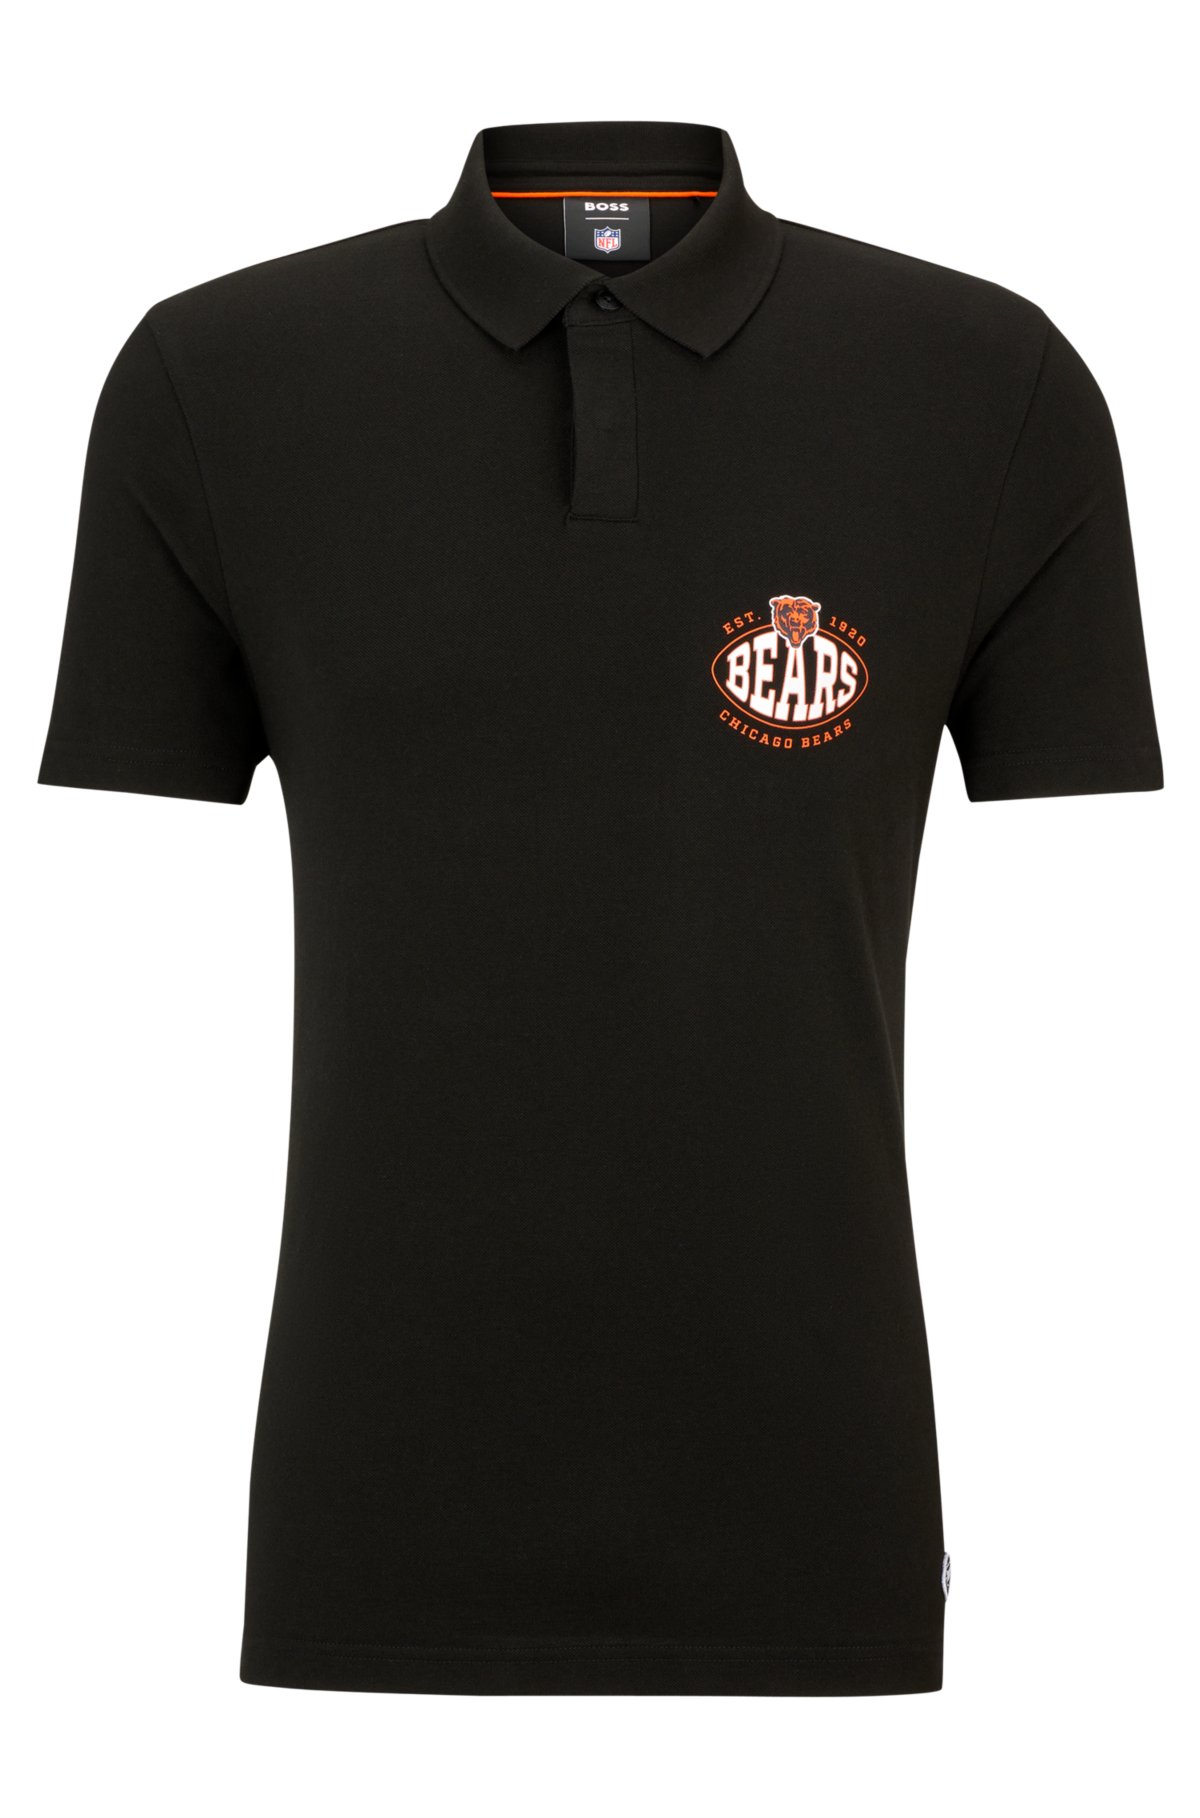 BOSS x NFL cotton-piqué polo shirt with collaborative branding, Bears